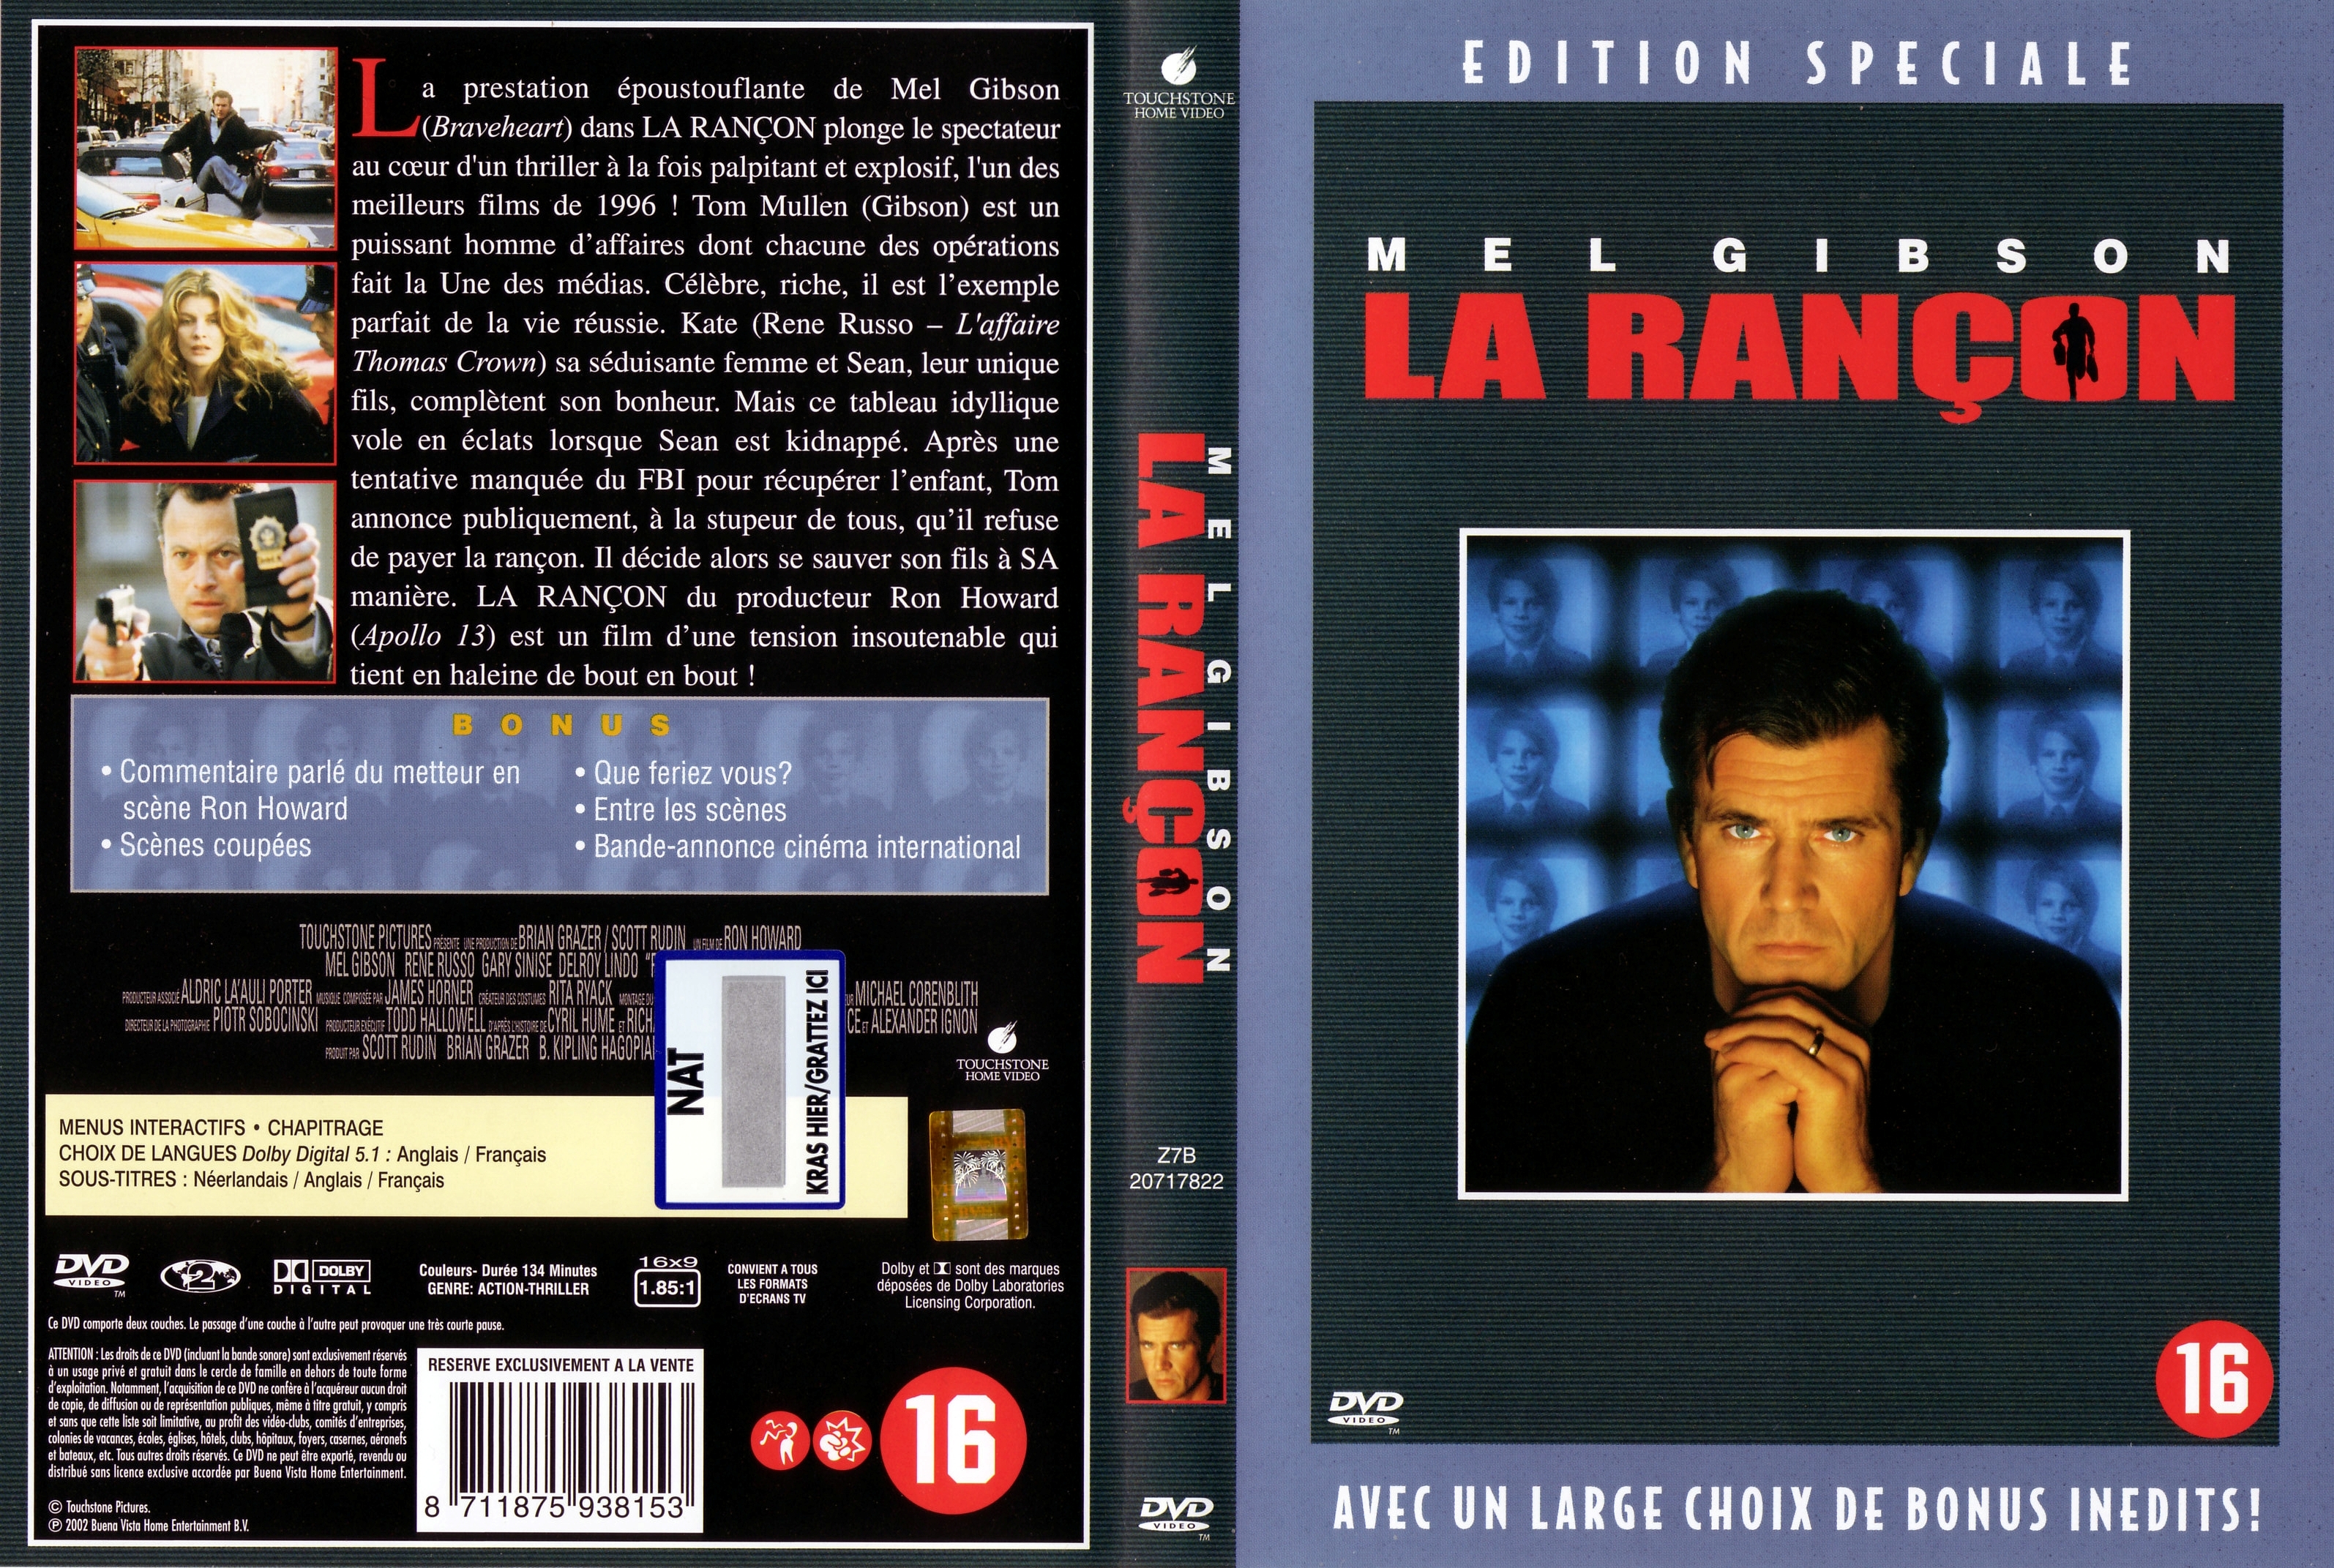 Jaquette DVD La rancon v2